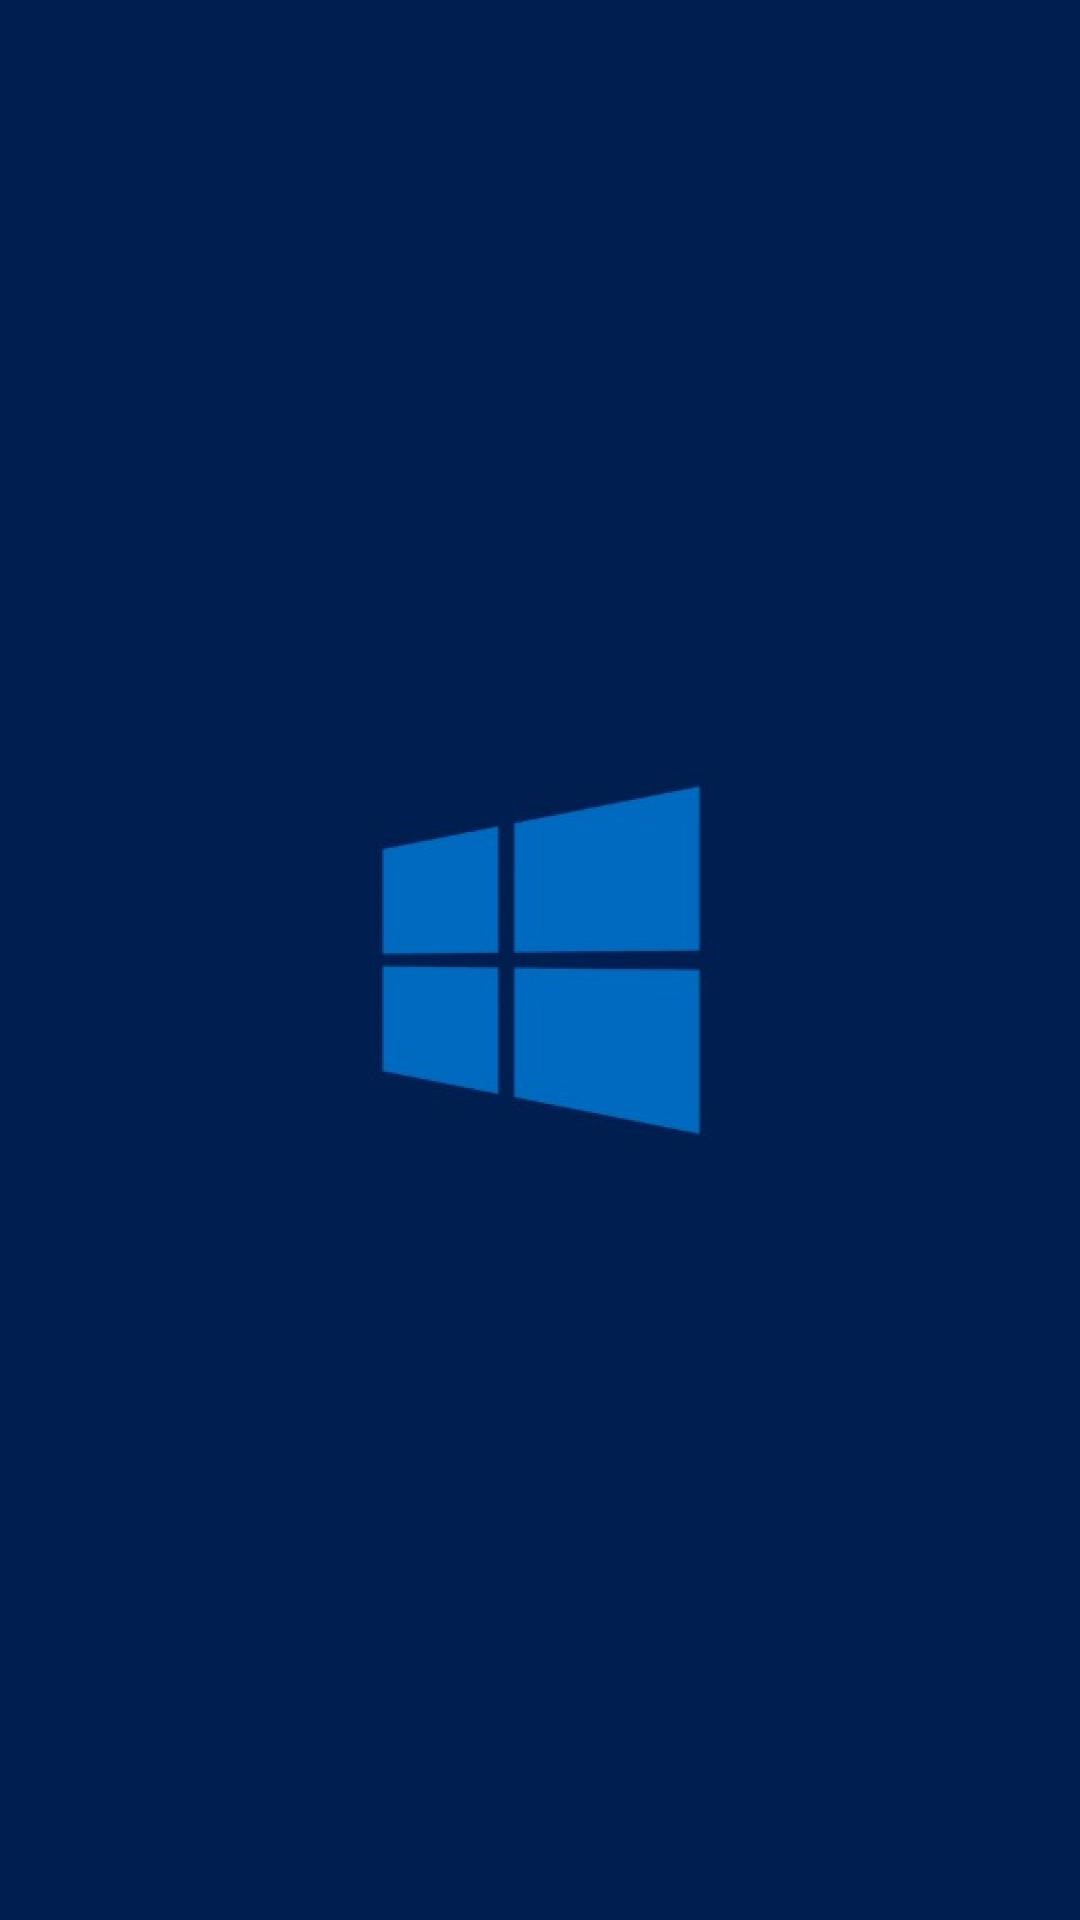 1080x1920 Blue minimalistic metro windows 8 dark clean logo wallpaper